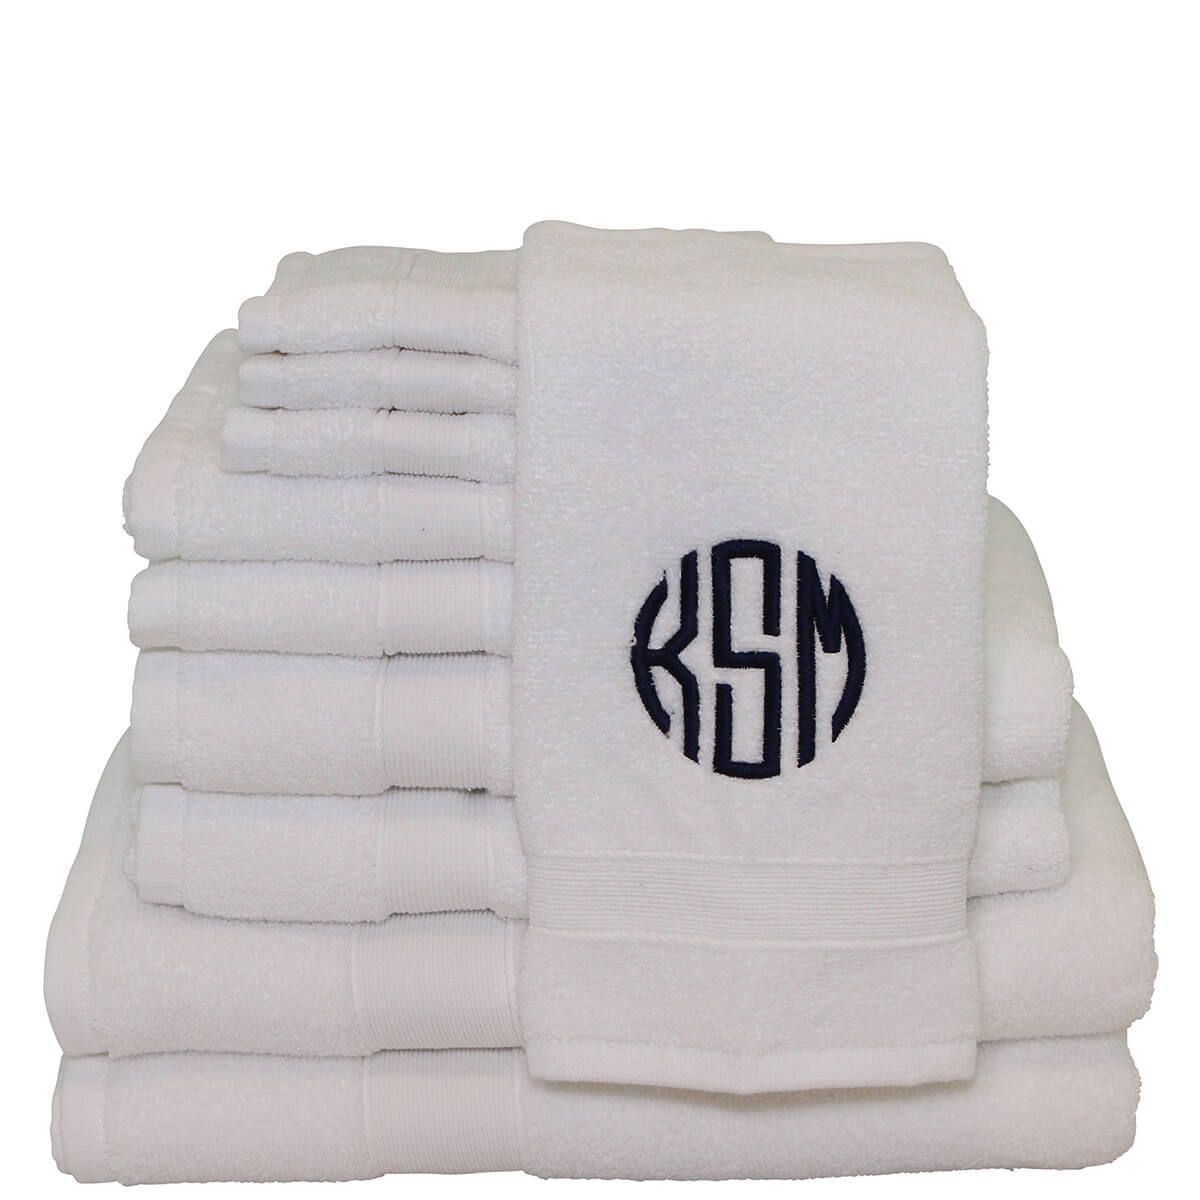 Bath towel set - monogram